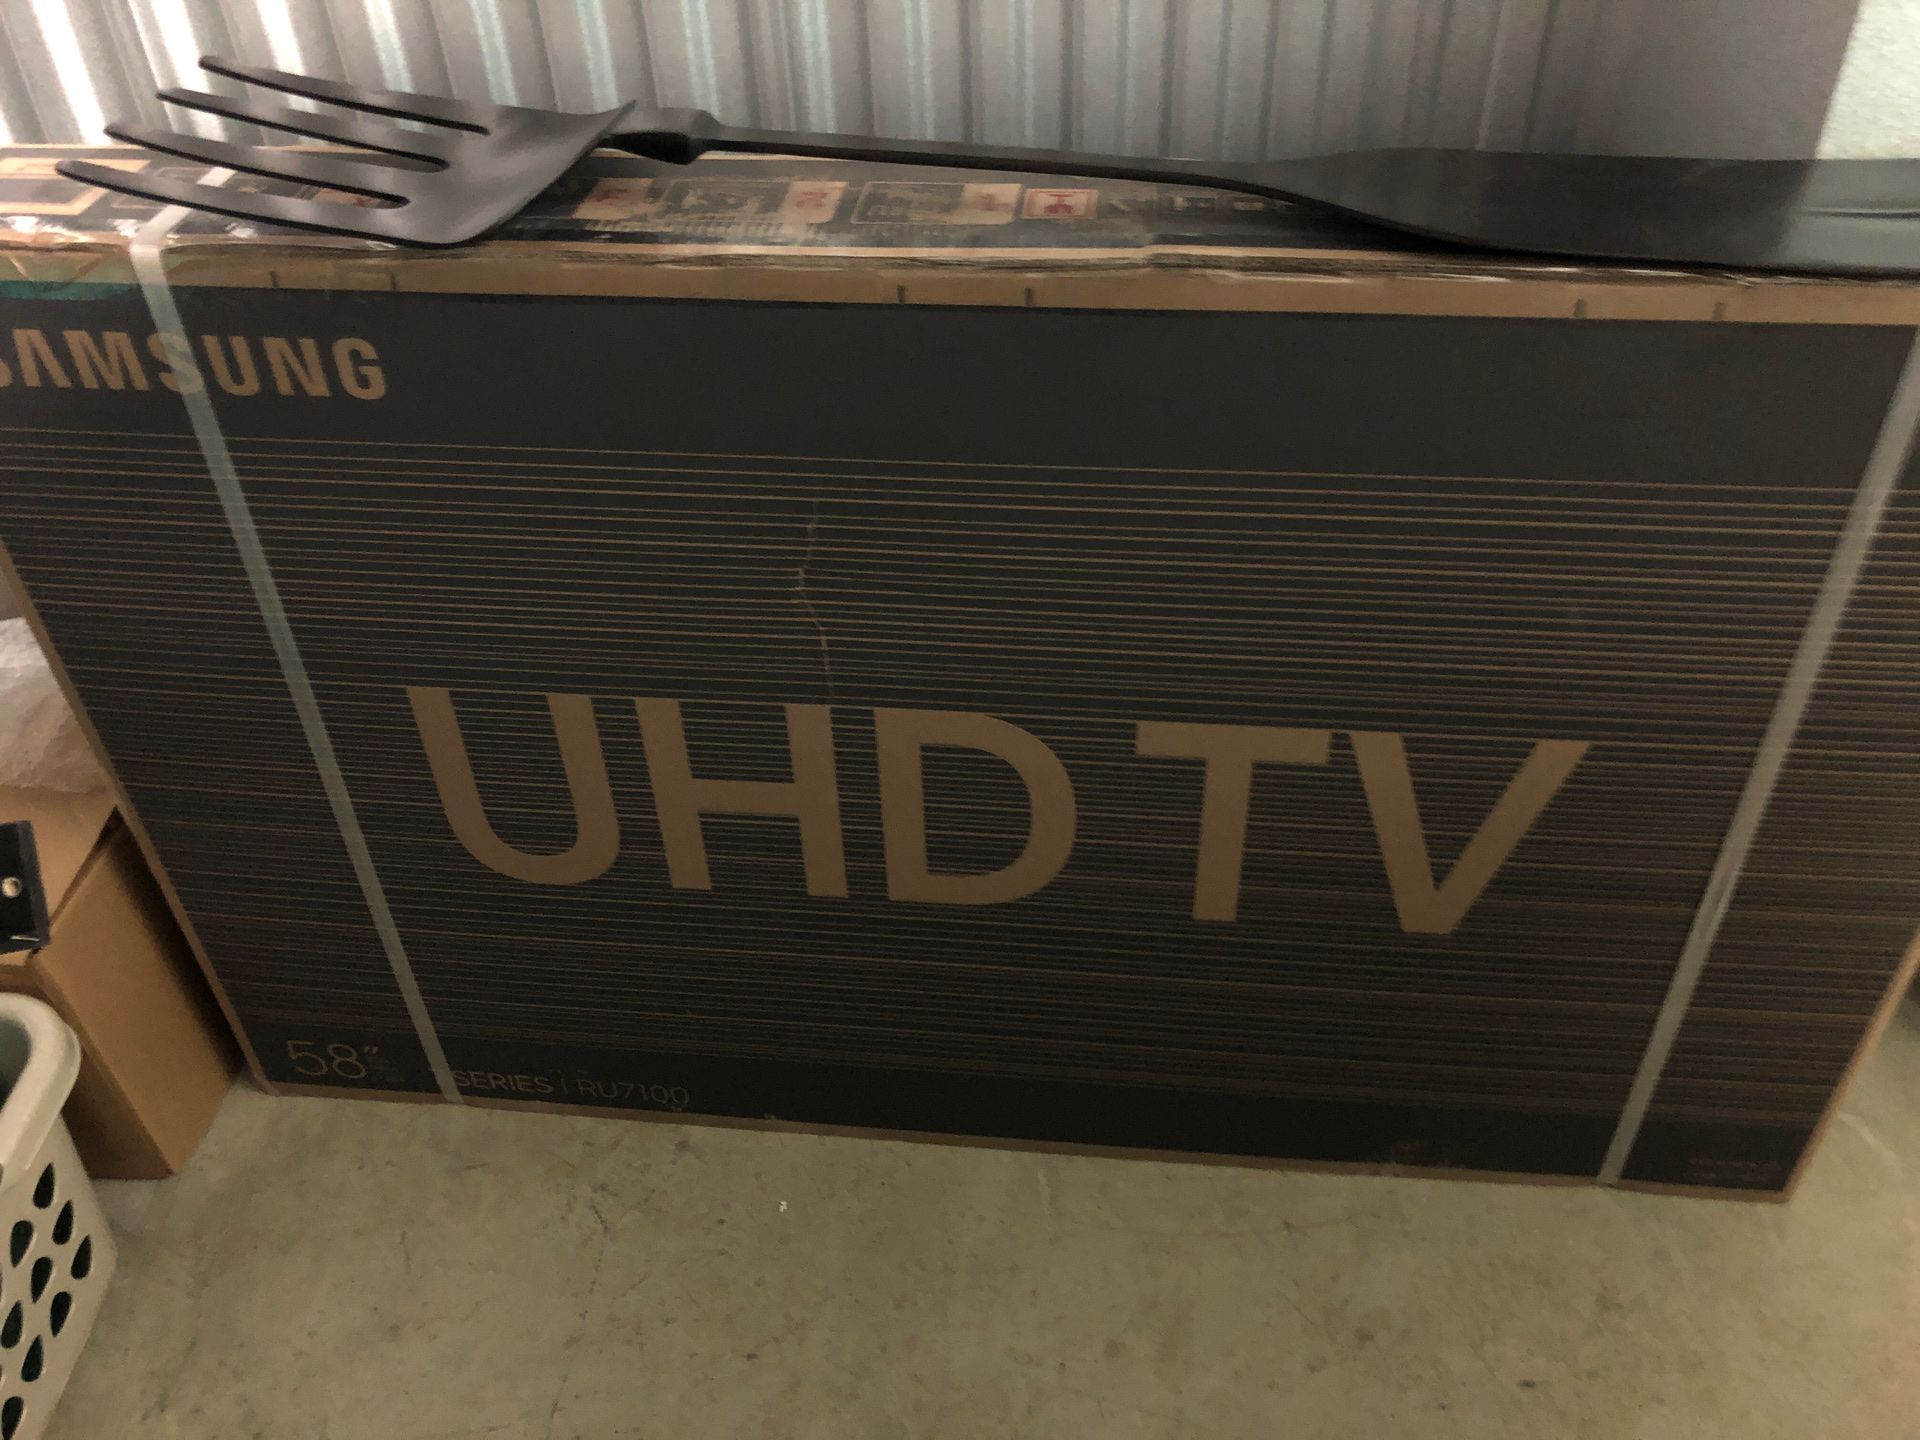 New in Box 58” Samsung TV - 4K UHD w/ HDR